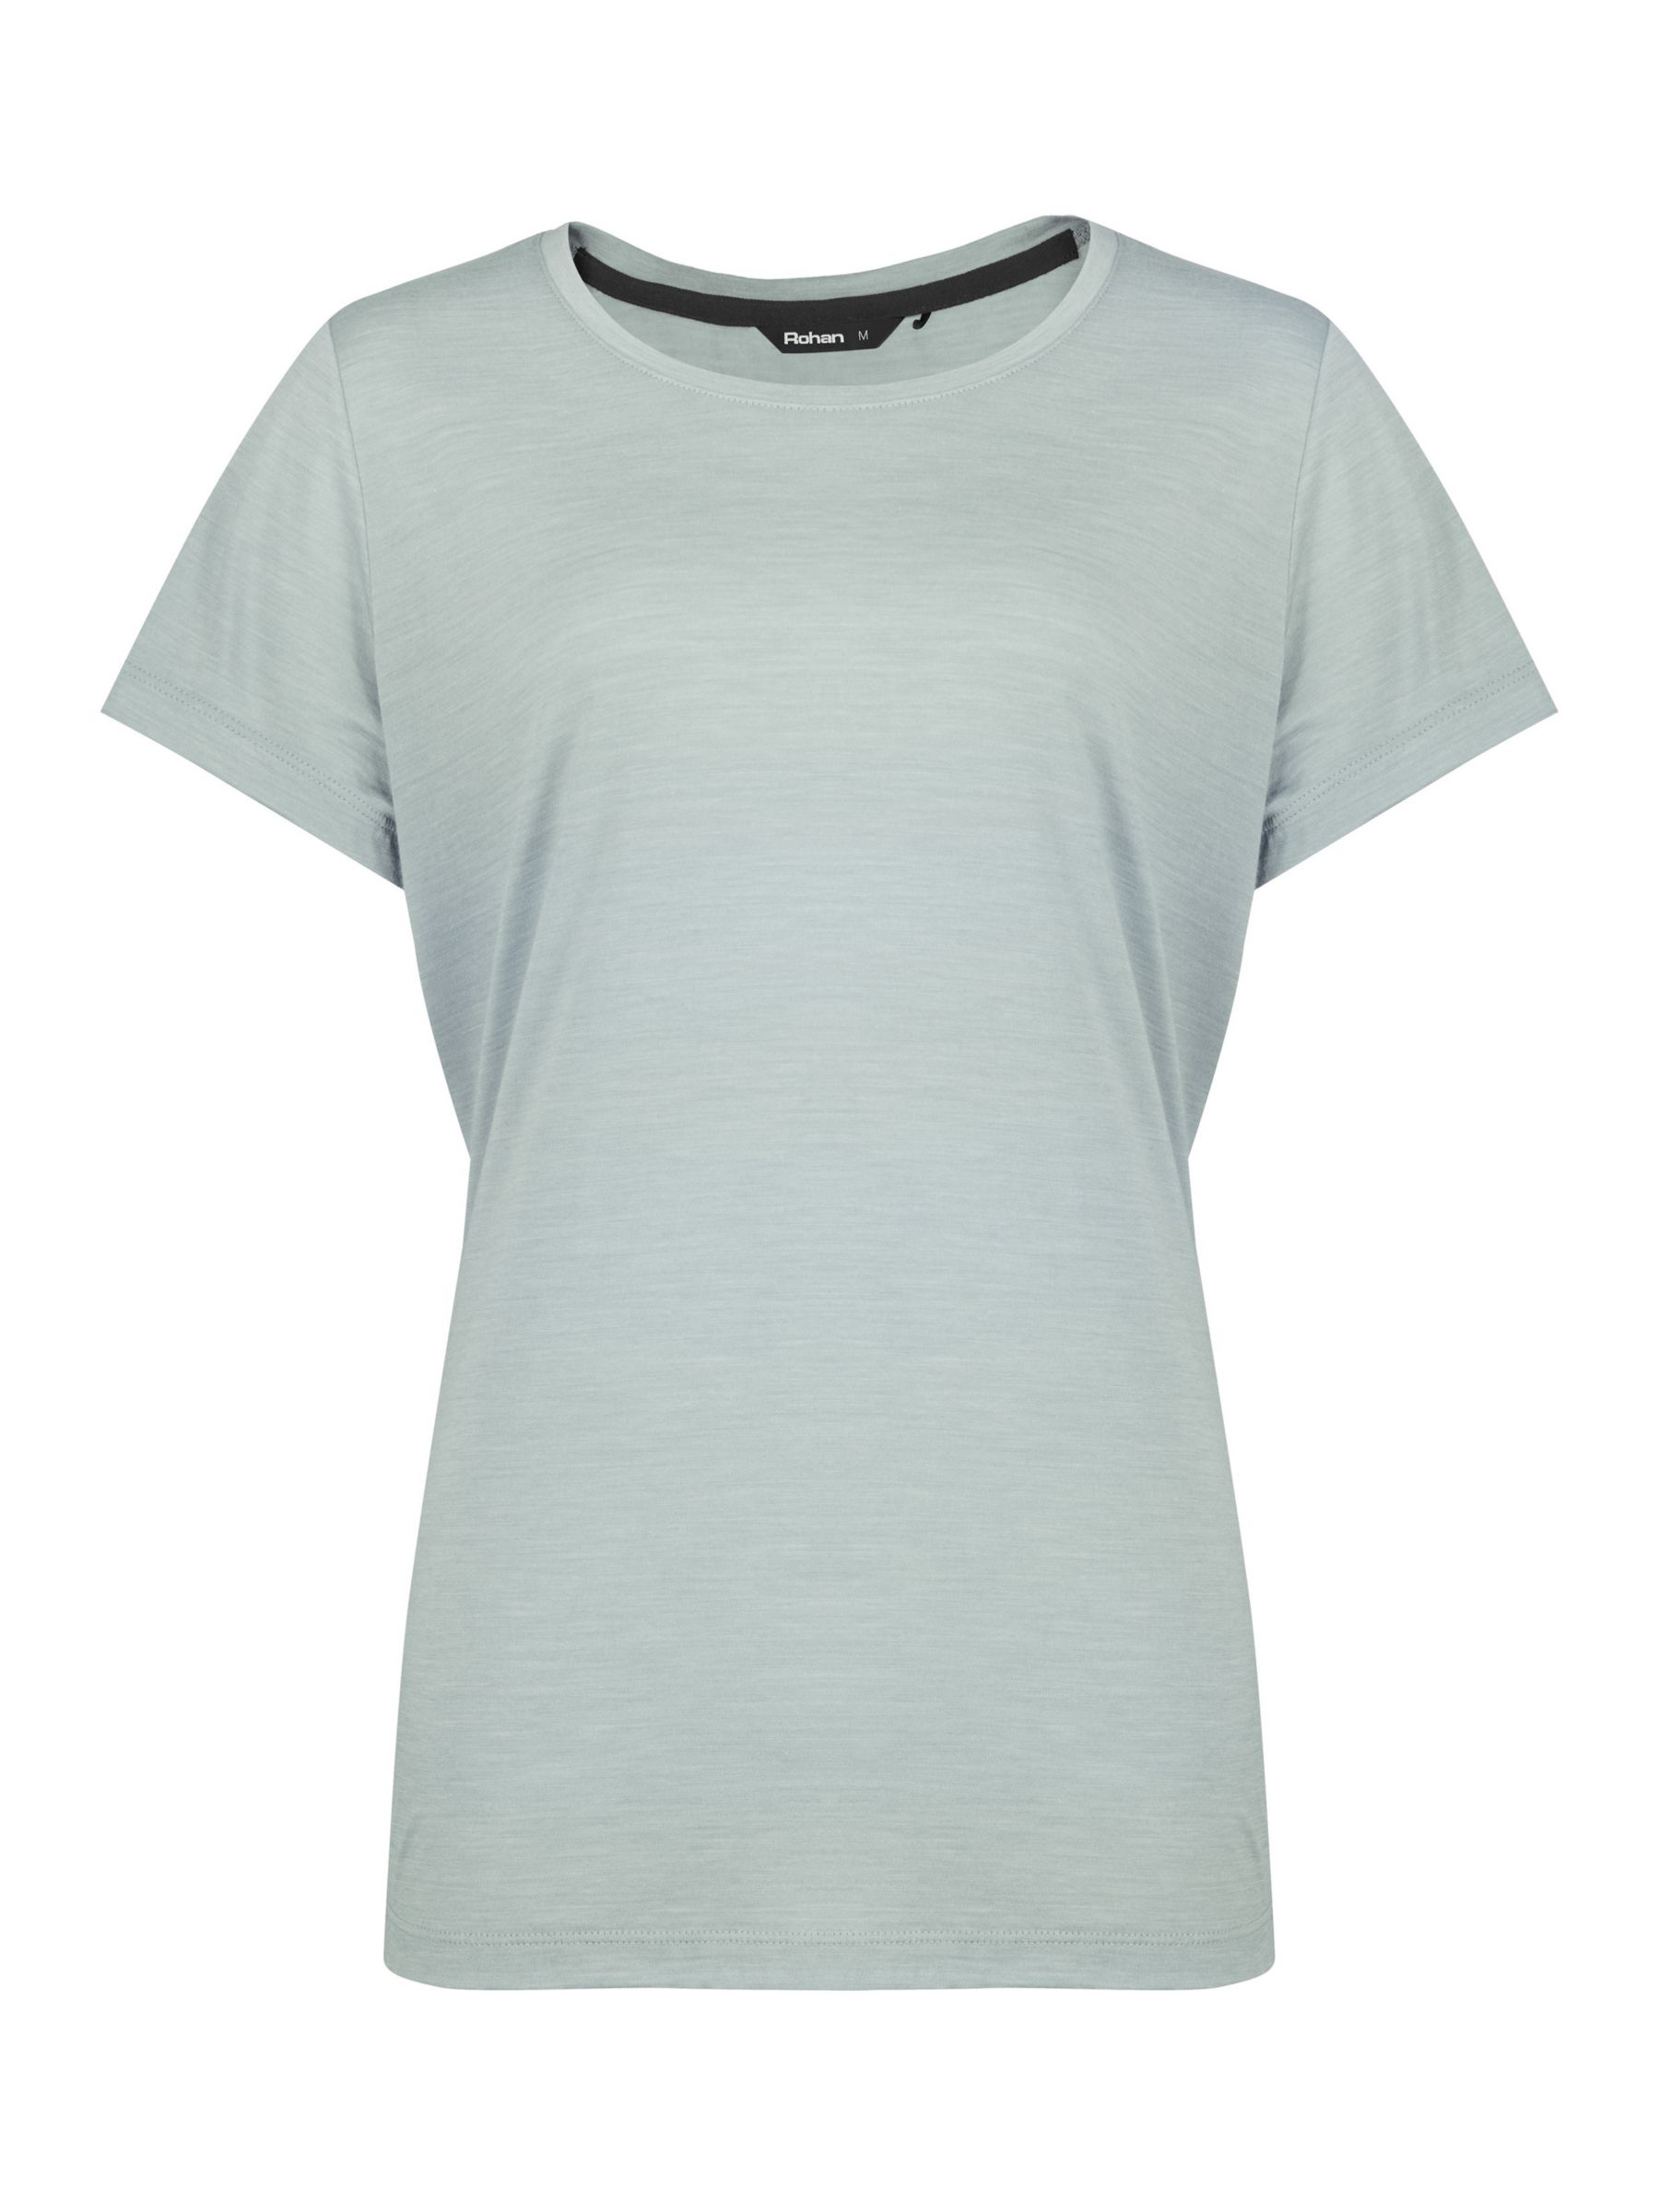 Buy Rohan Merino Cool Shirt Sleeve T-Shirt Online at johnlewis.com